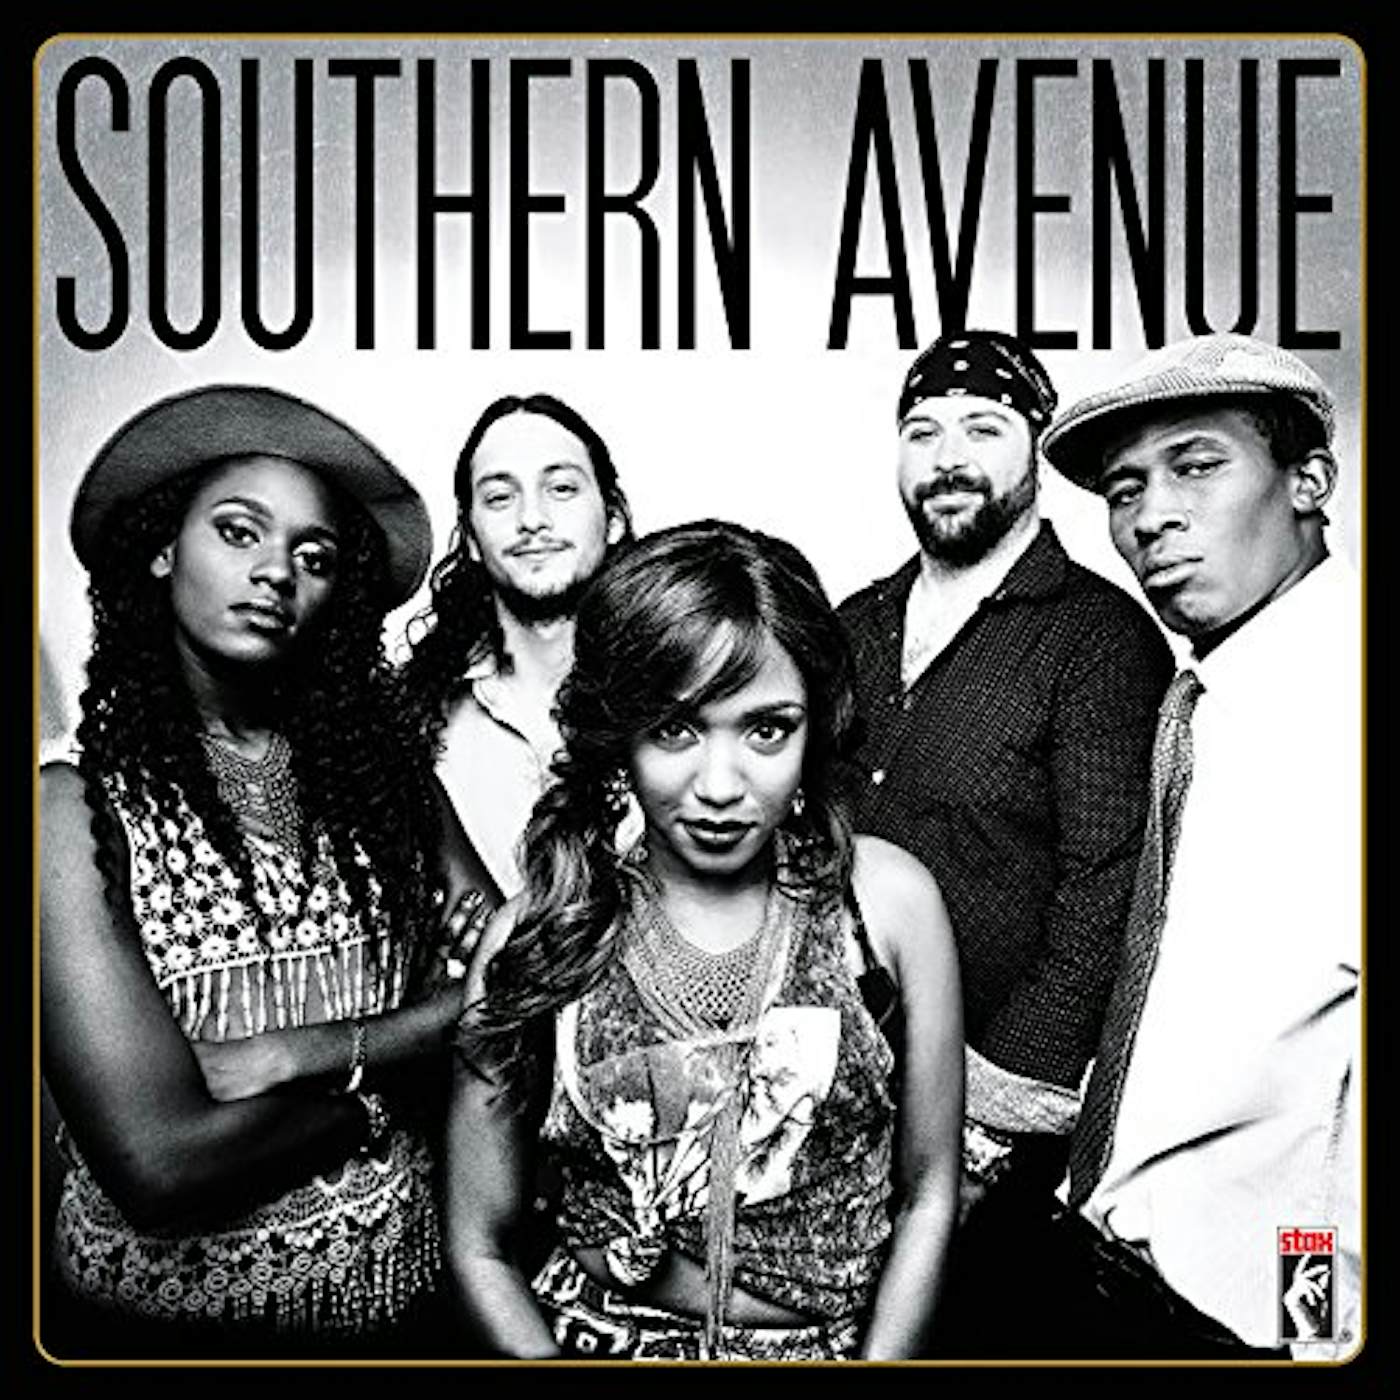 Southern Avenue Vinyl Record